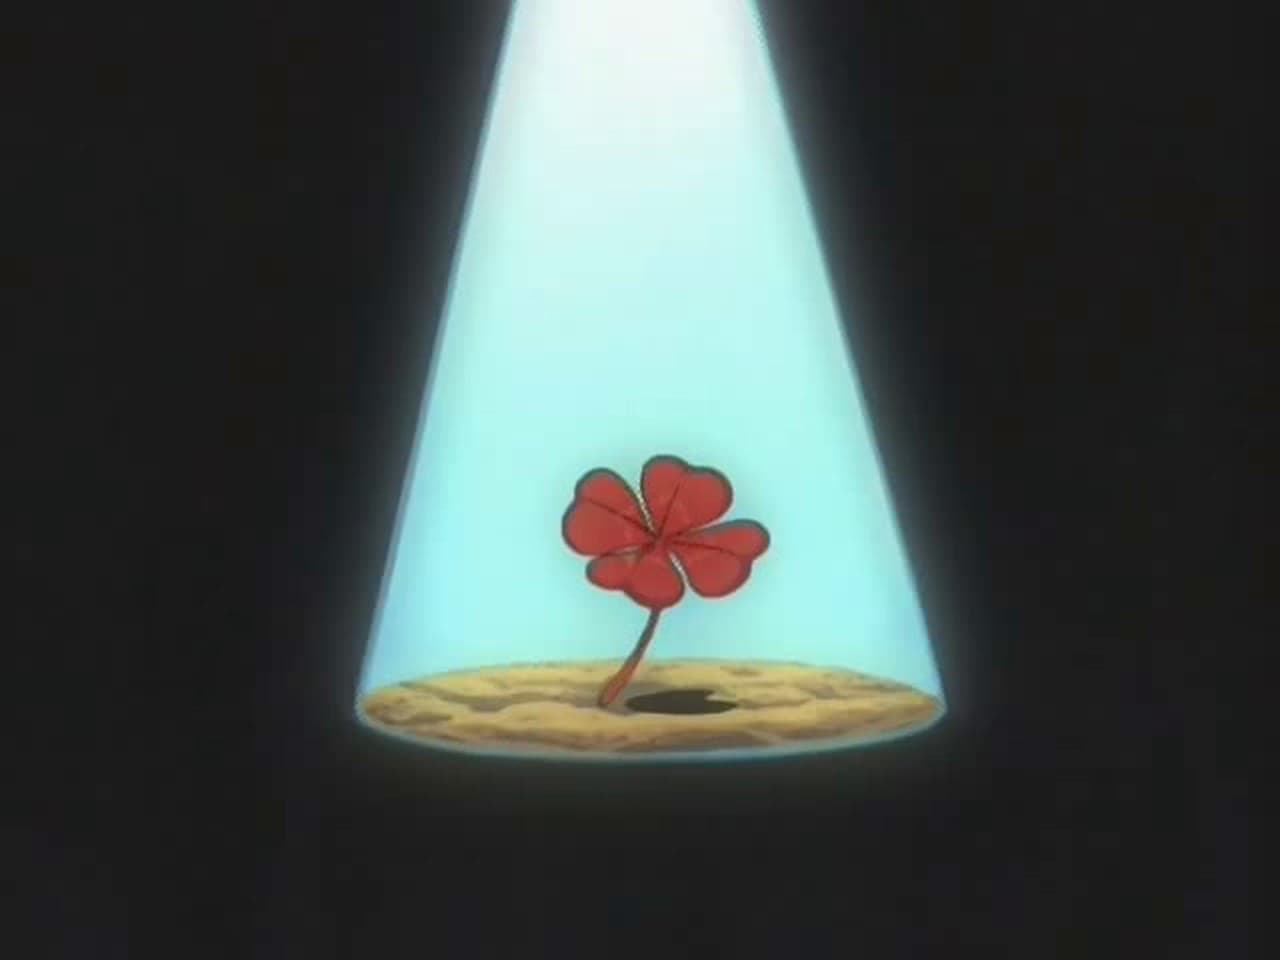 Naruto - Season 0 Episode 1 : Naruto OVA: Find the Crimson Four-Leaf Clover!